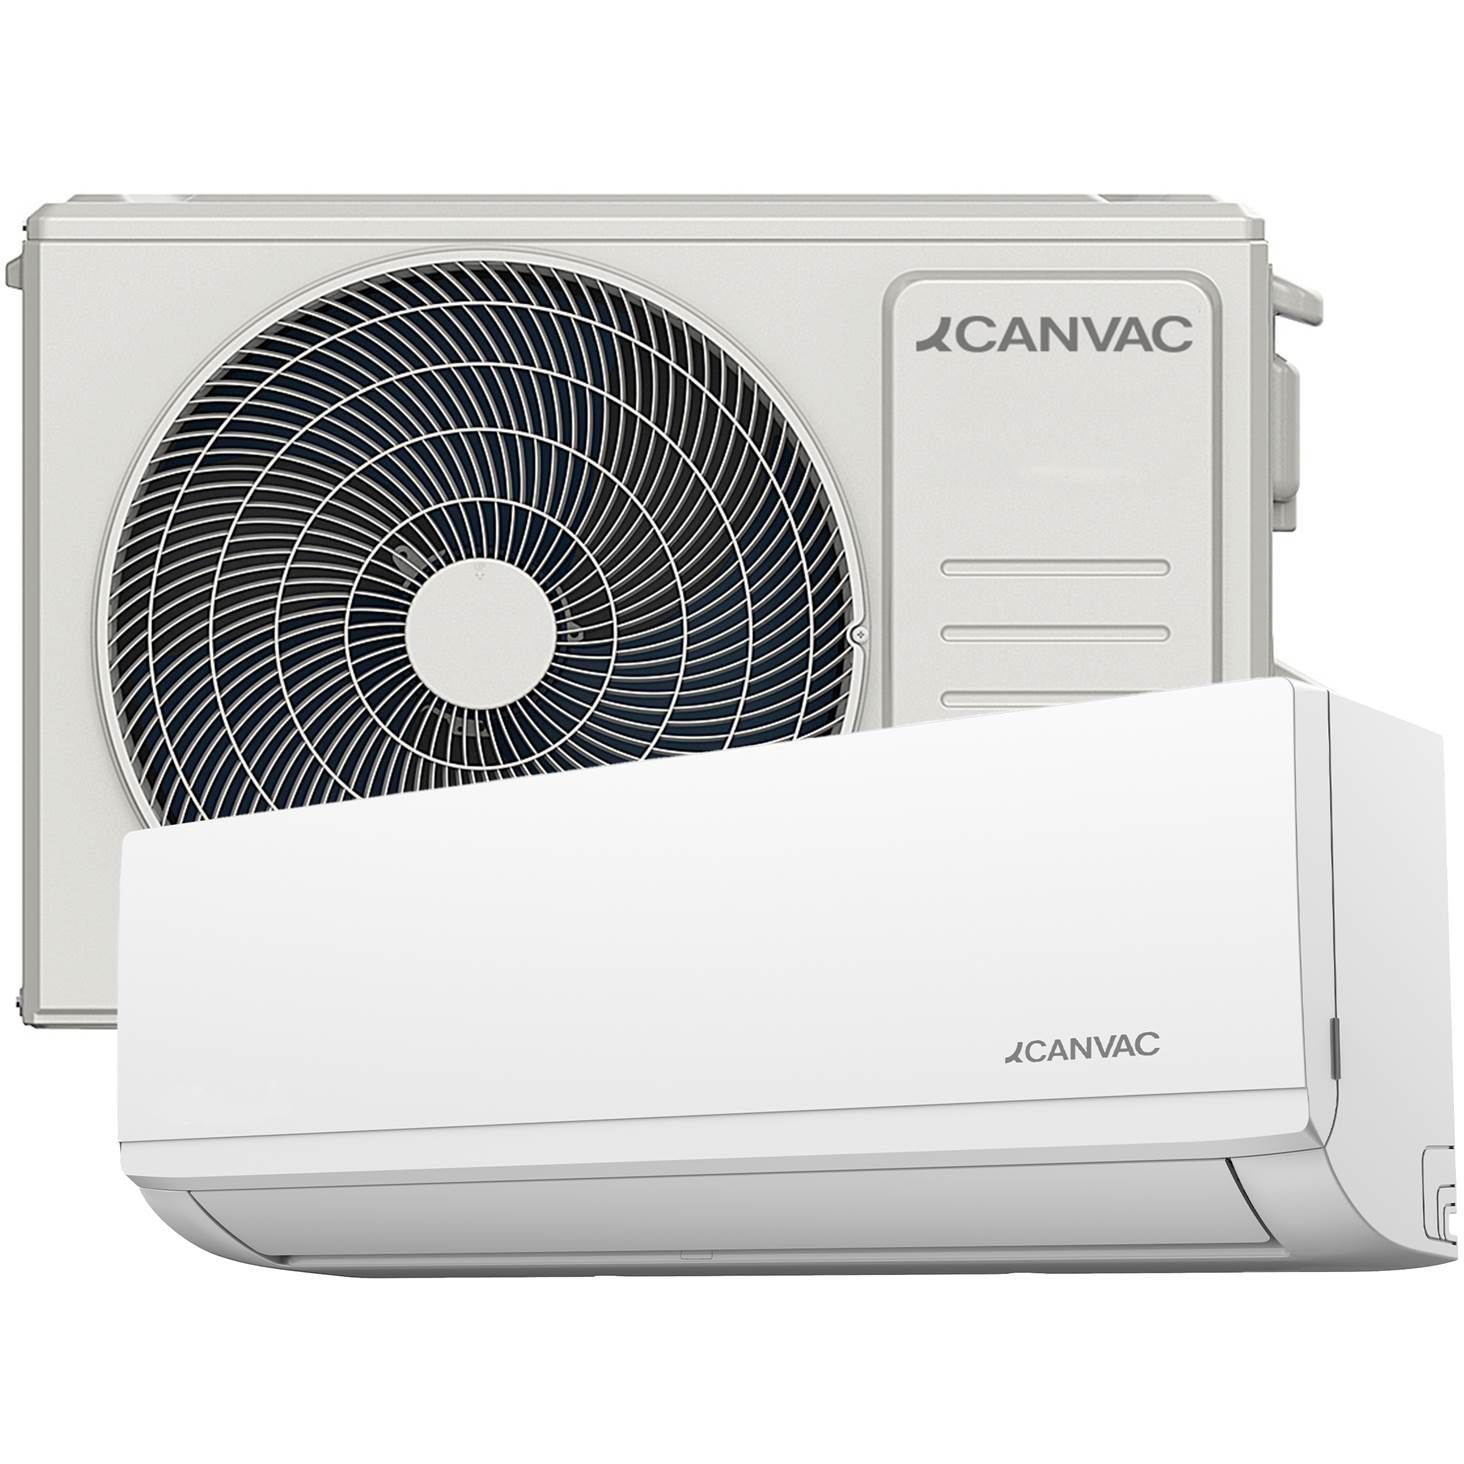 122307 Canvac Q Heat 1220-E1 - Varmepumpe Hus & Have,Klima/ ventilation,Varmepumper 2190004683 1220-E1